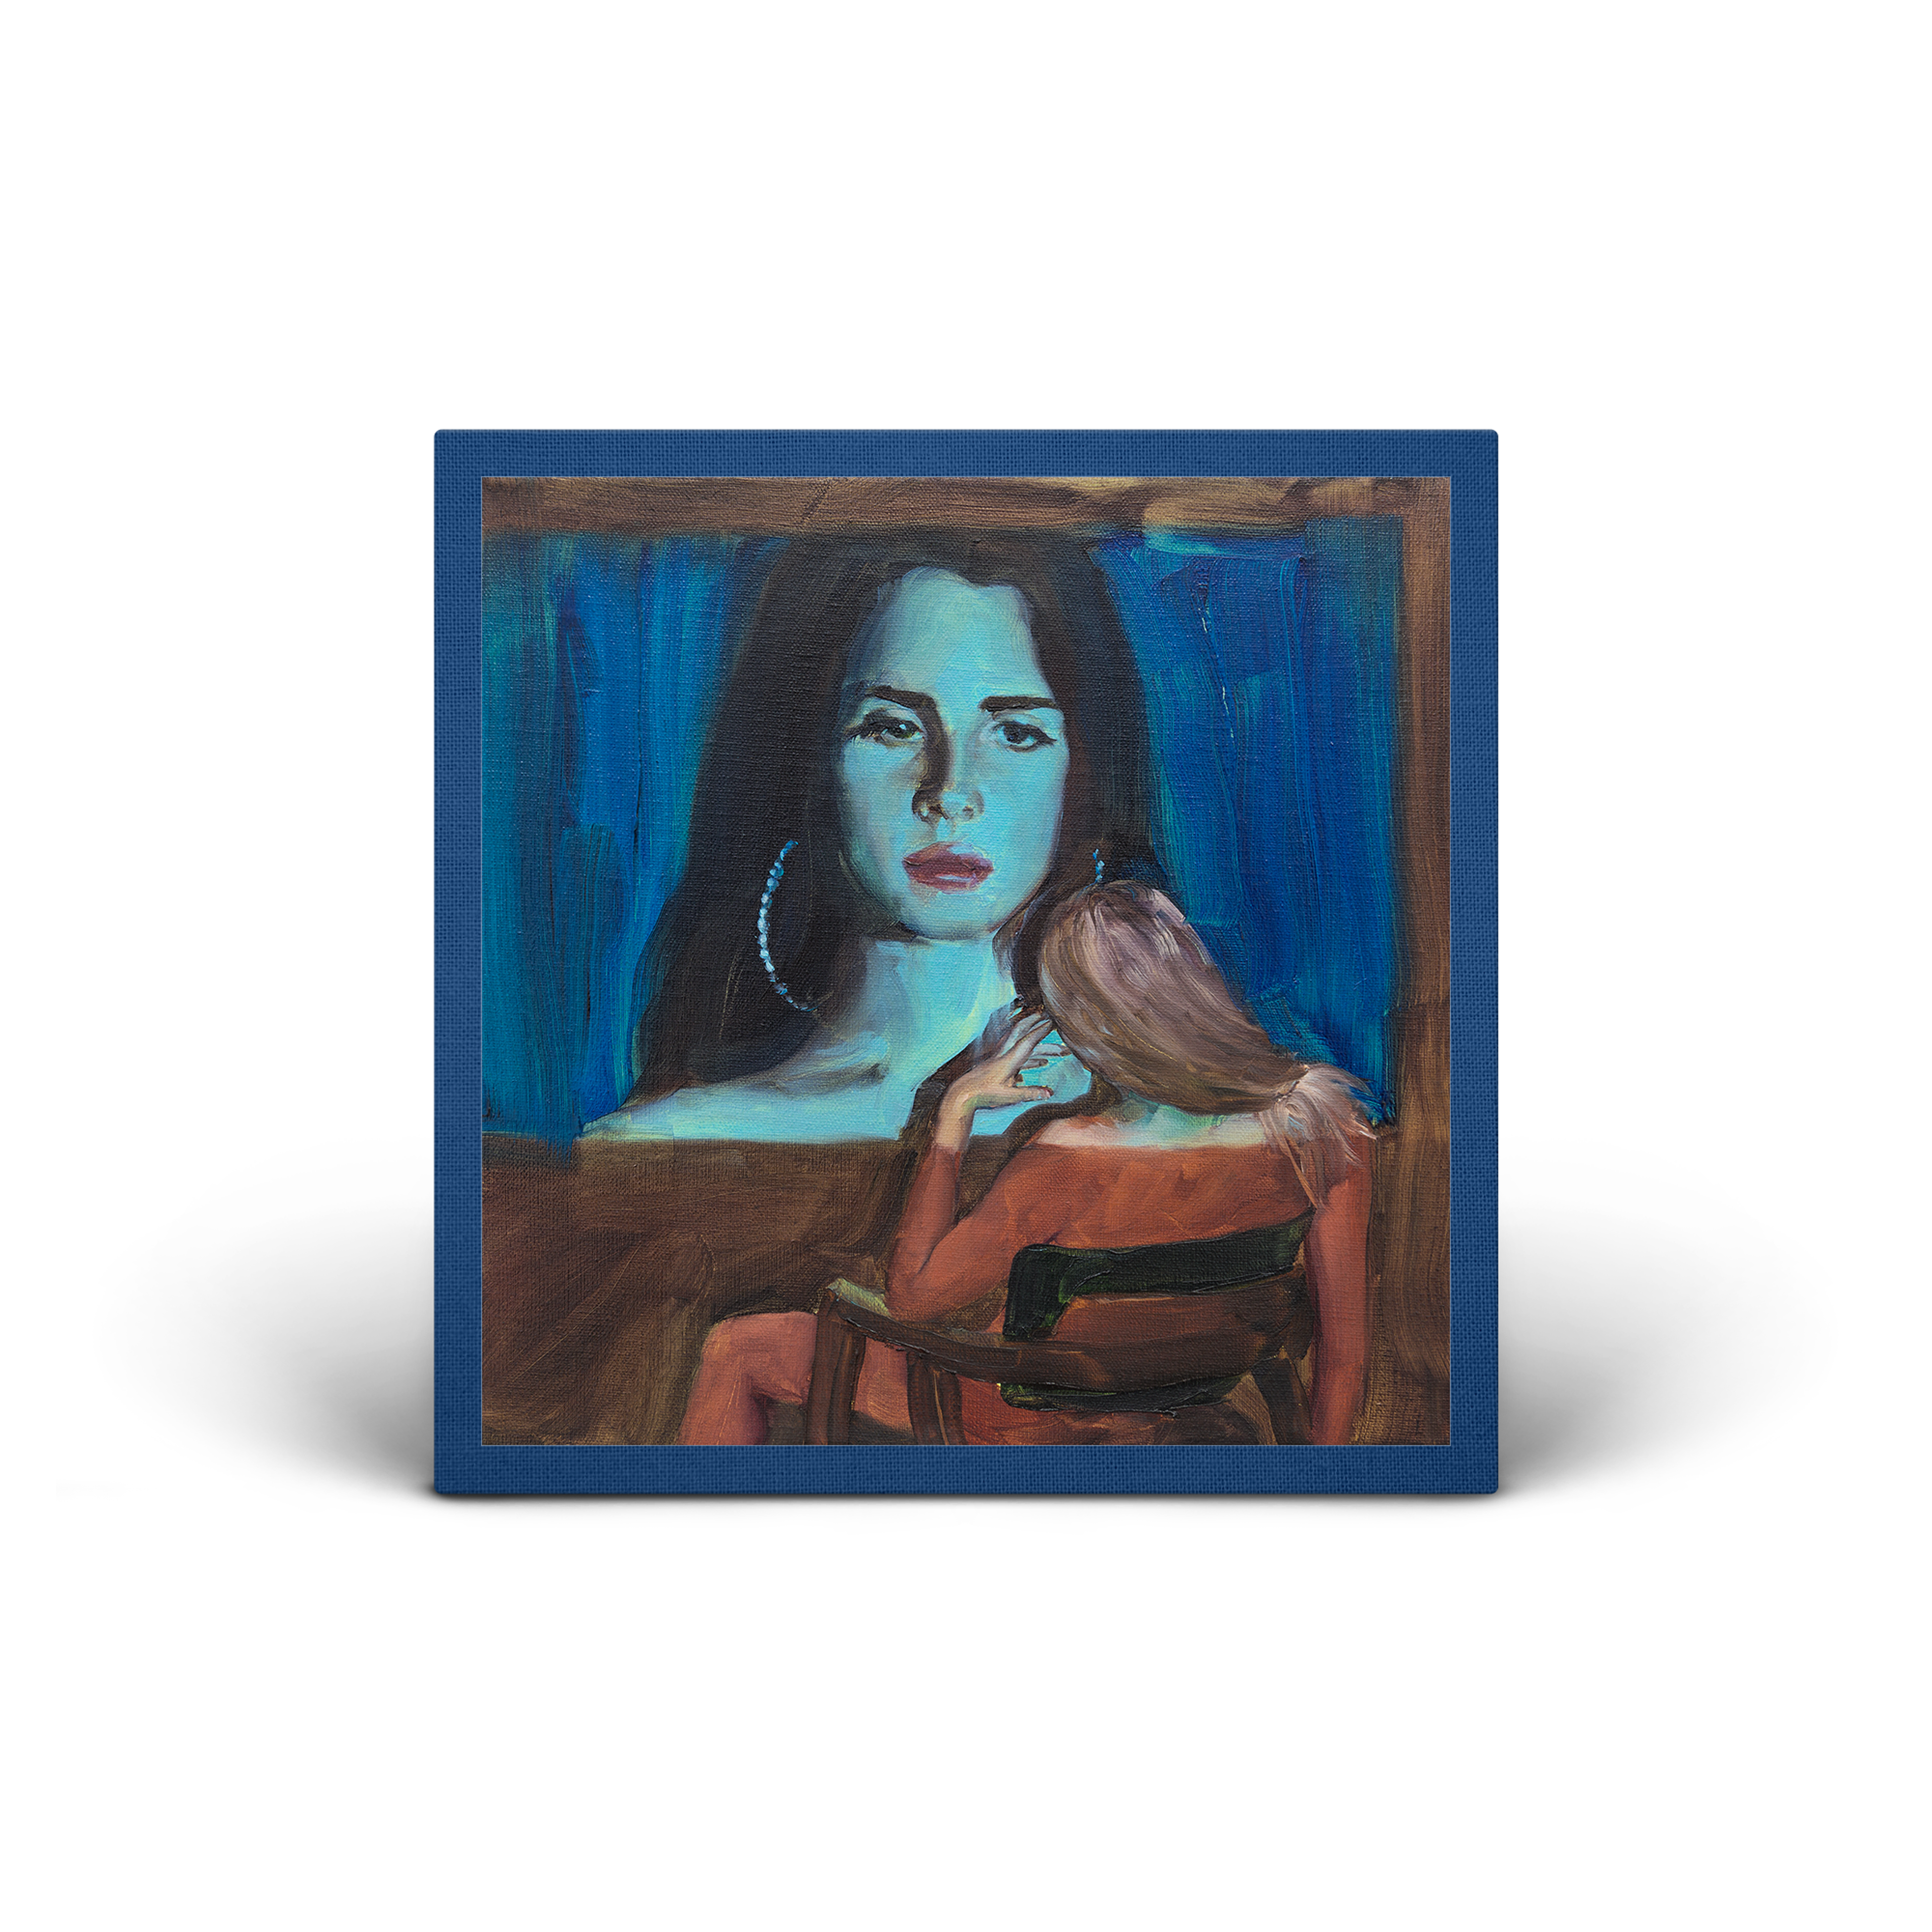 Alternate View 1 of Lana Del Rey - Born To Die by Jenna Gribbon Gallery Vinyl